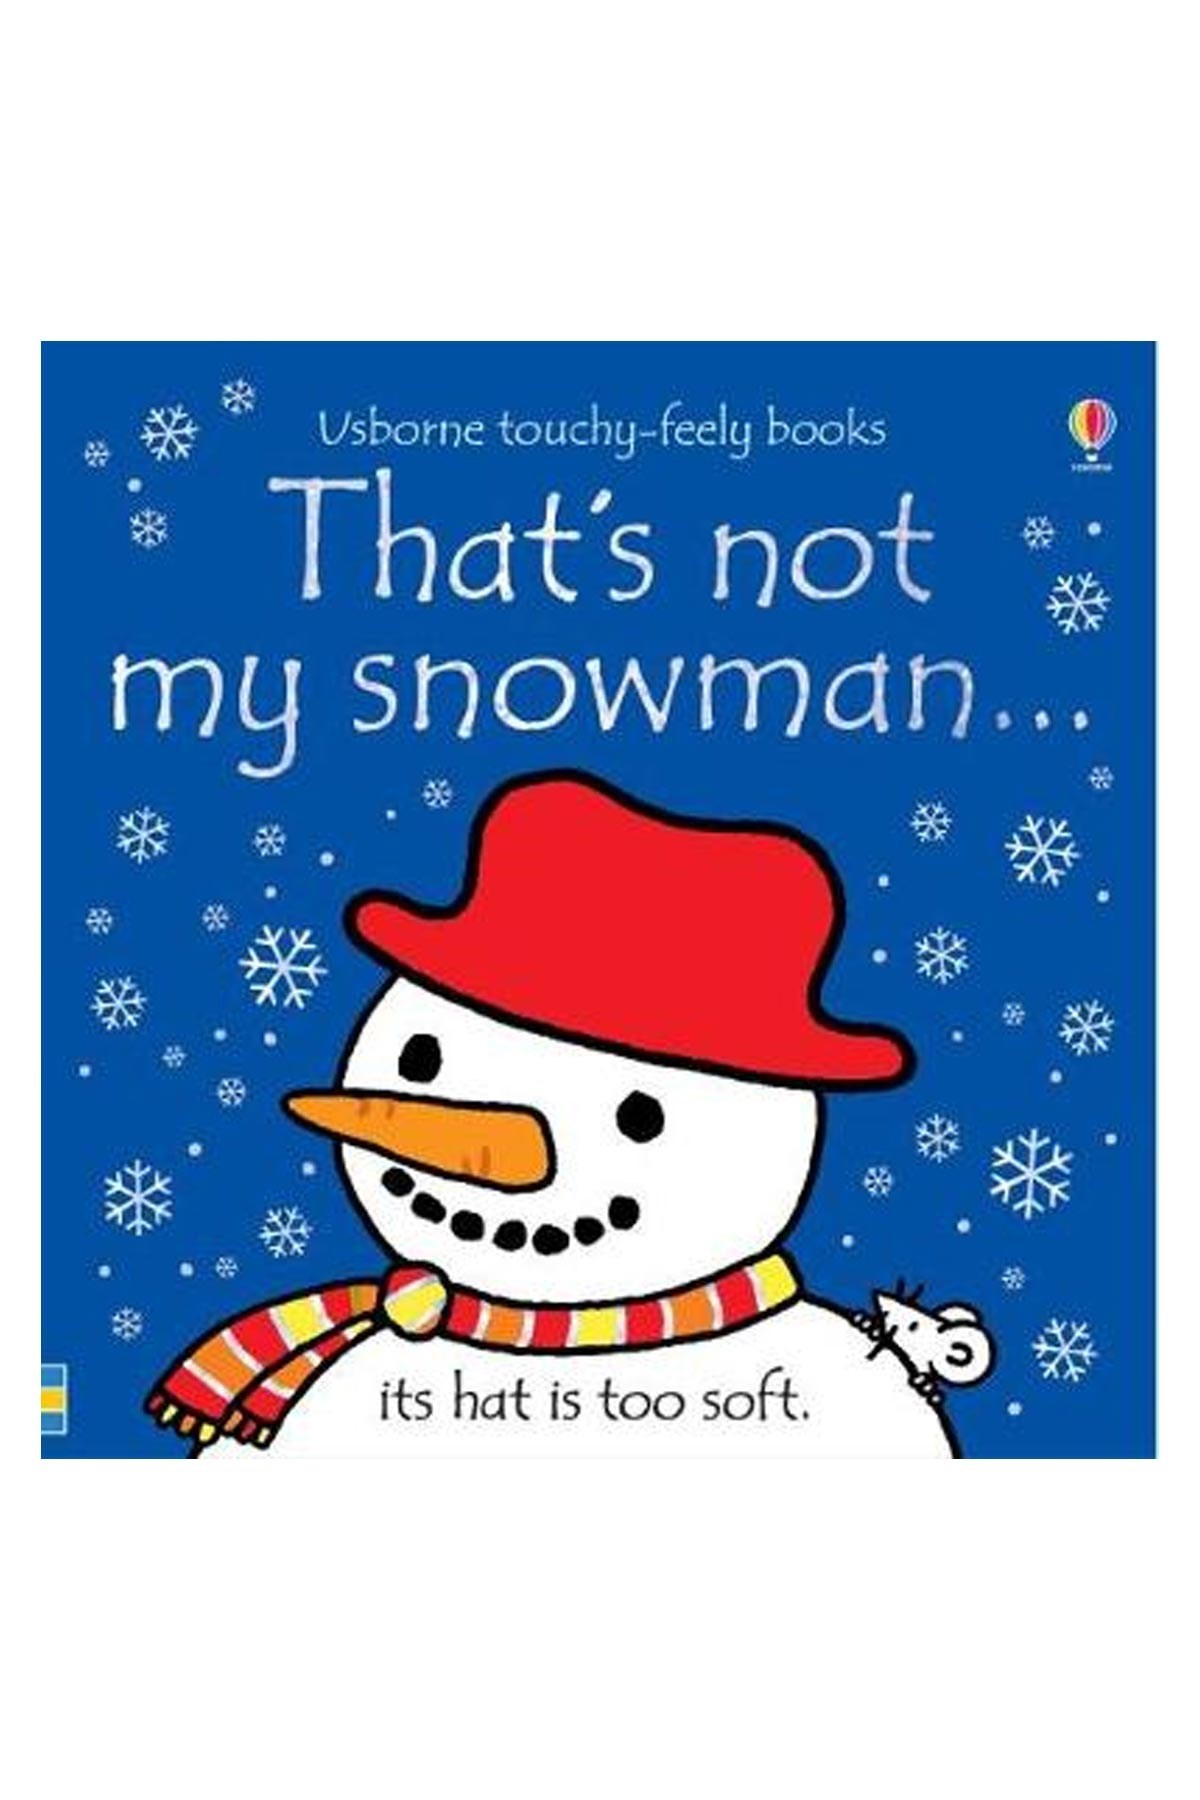 The Usborne That's Not My Snowman